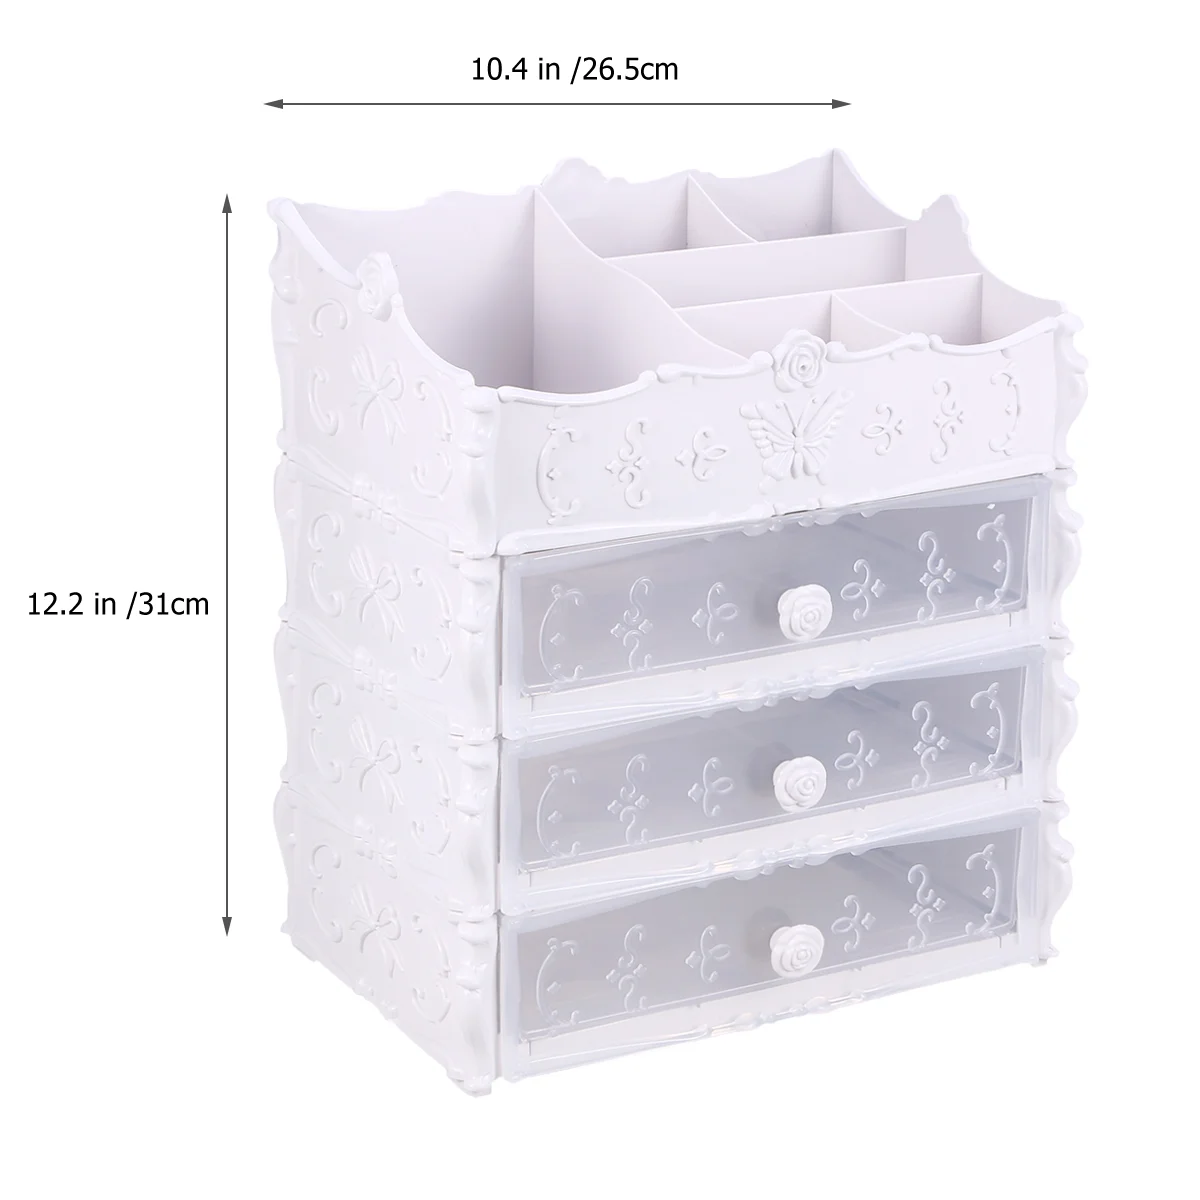 

3-Tier Multifunctional Saving Space Desktop Comestics Toiletry Organizer Makeup Storage Box with Drawers (White)